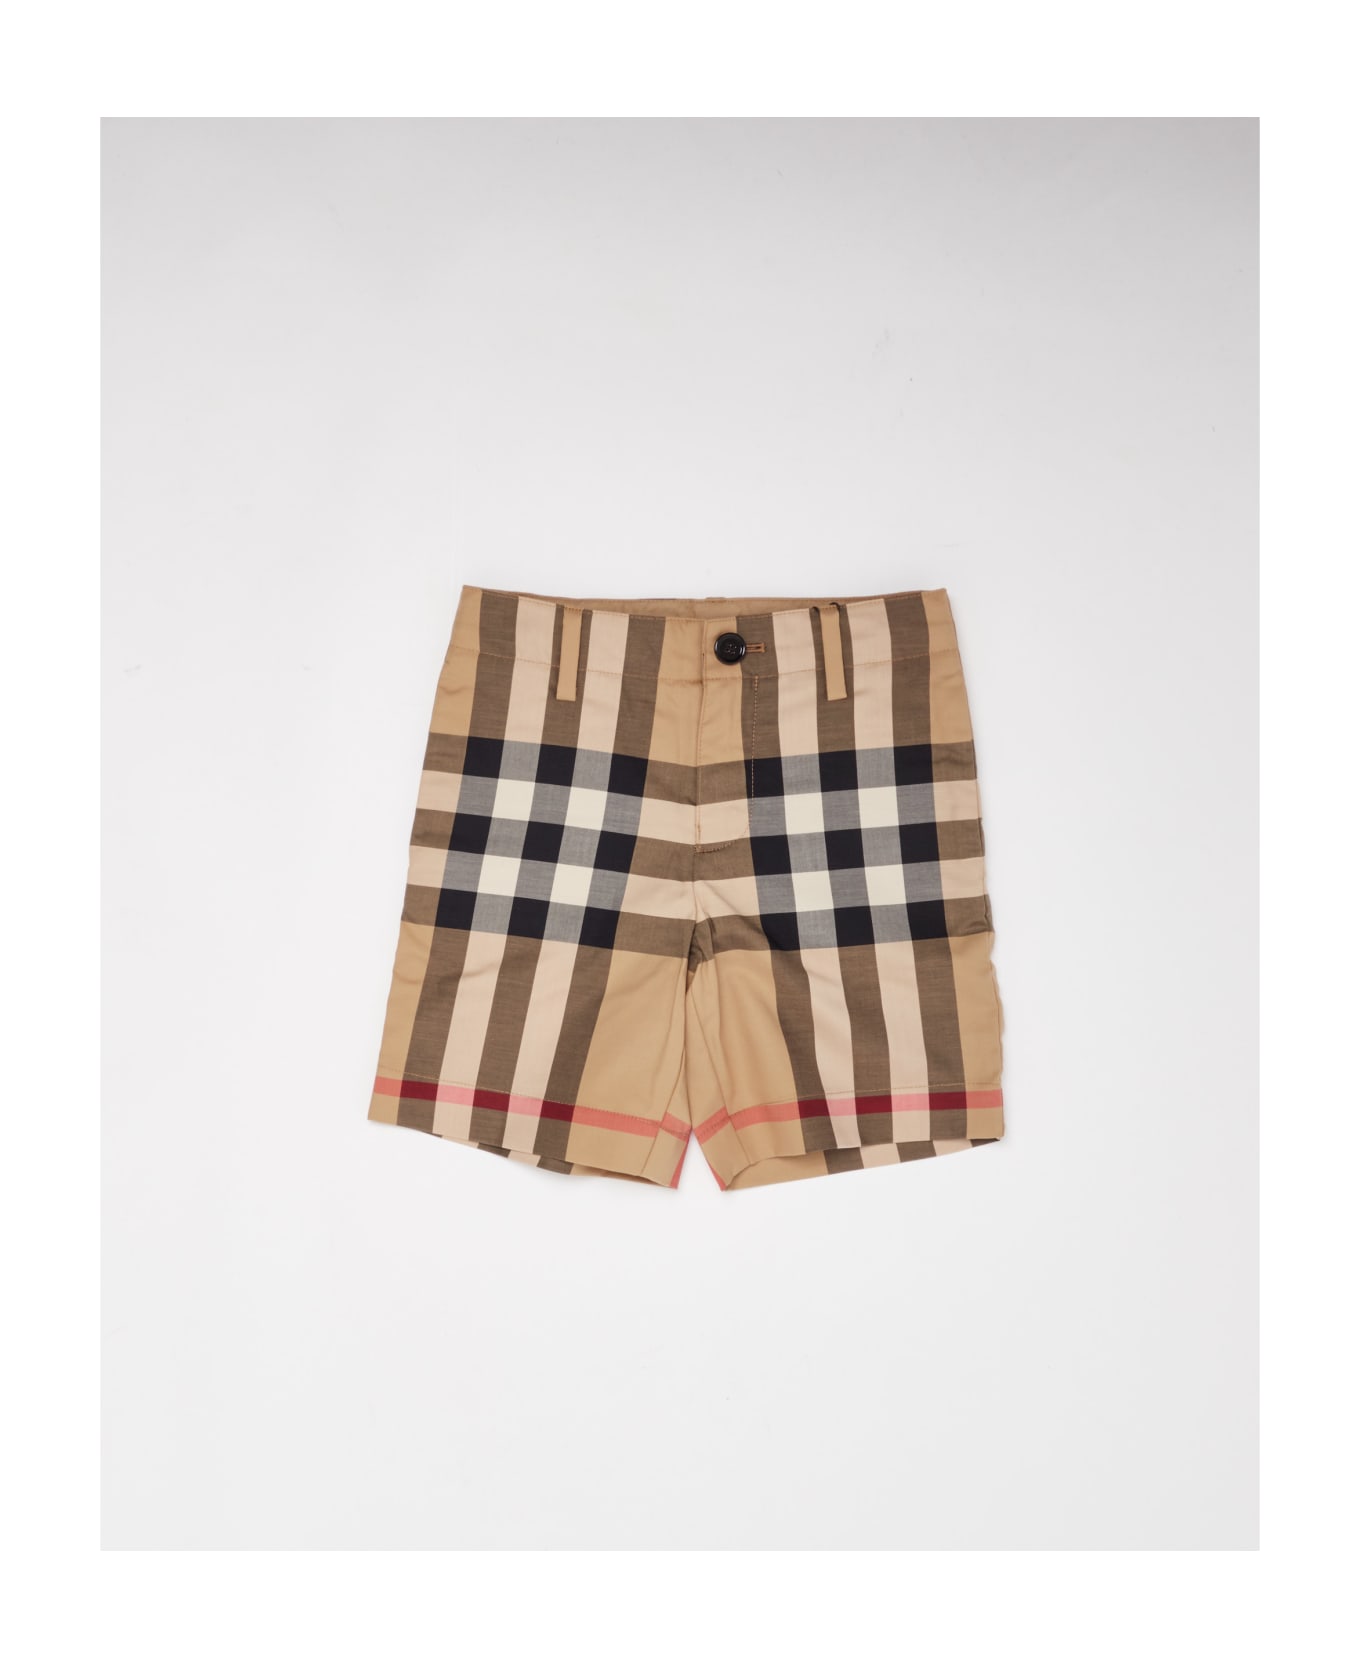 Burberry Royston Short Shorts - CHECK BEIGE